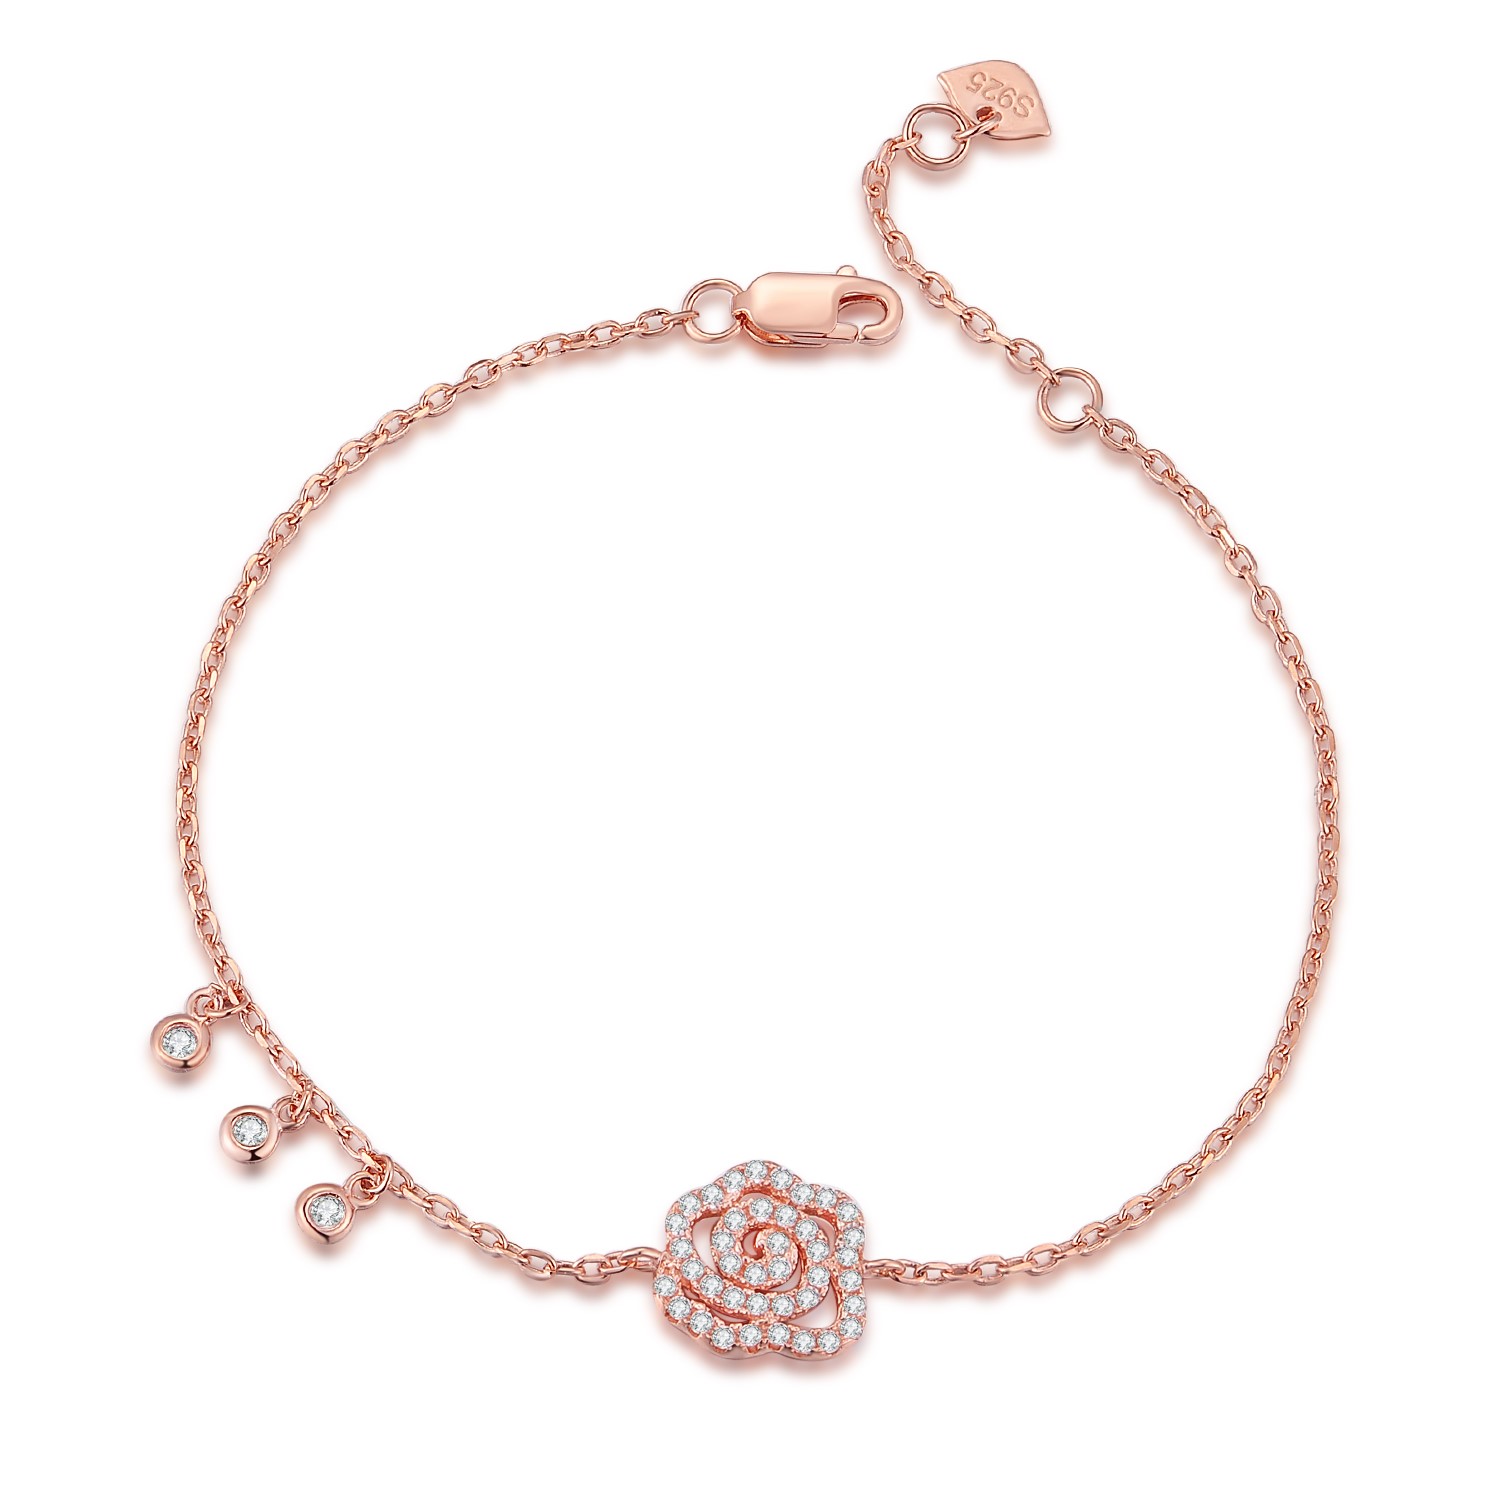 Factory wholesale 925 sterling silver jewelry bracelet rose gold cubic zirconia custom charm charm women rose flower bracelet